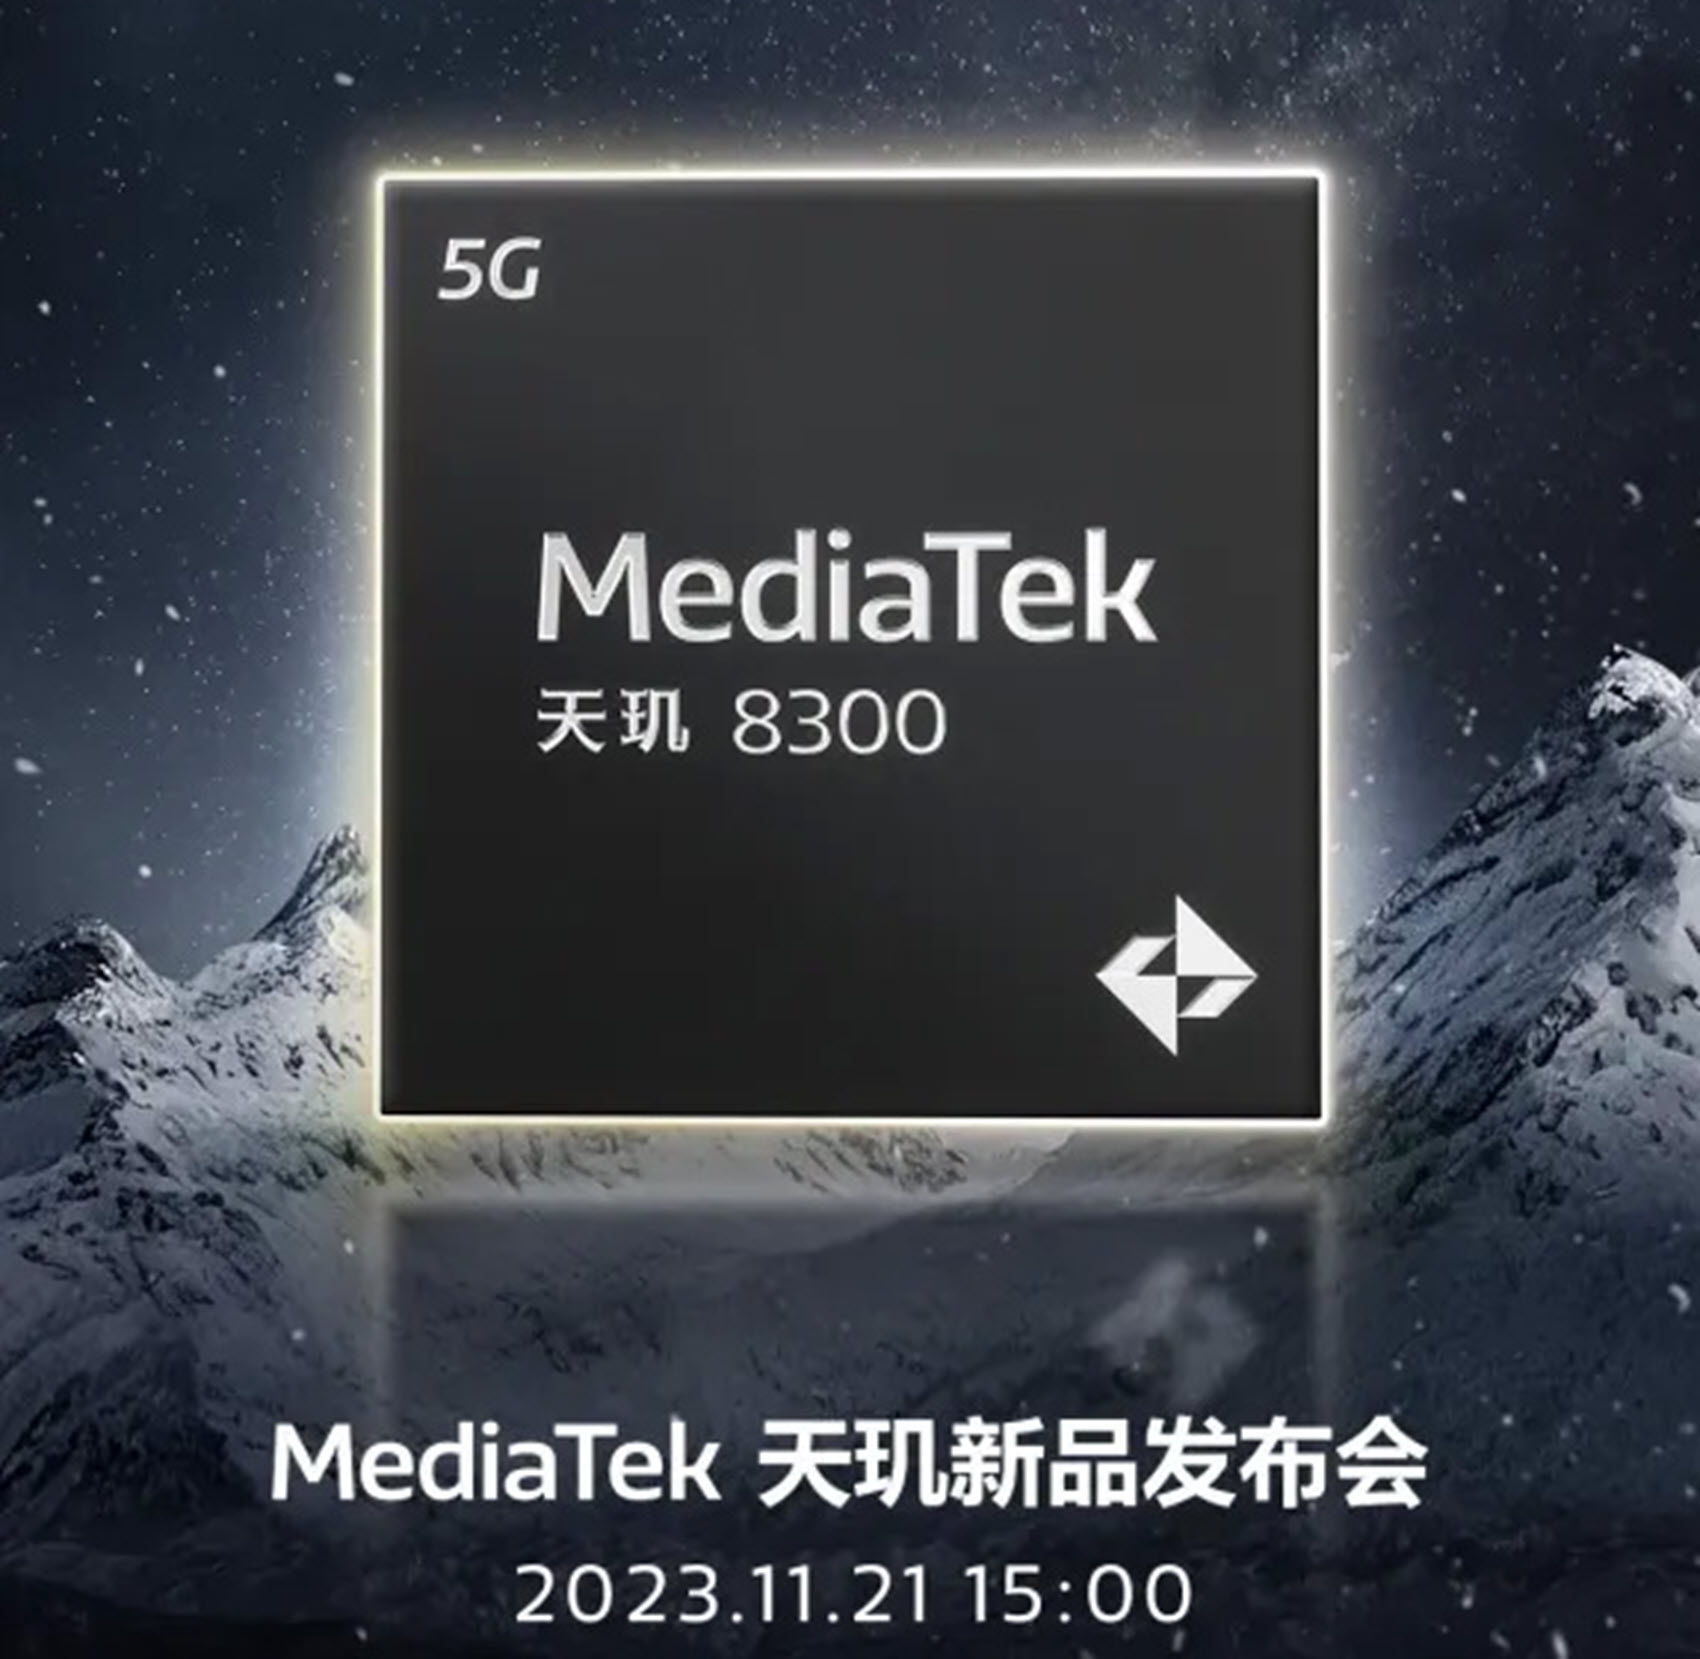 MediaTek Dimensity 8300: Υπόσχεται “σοβαρή” απόδοση και χαμηλή κατανάλωση